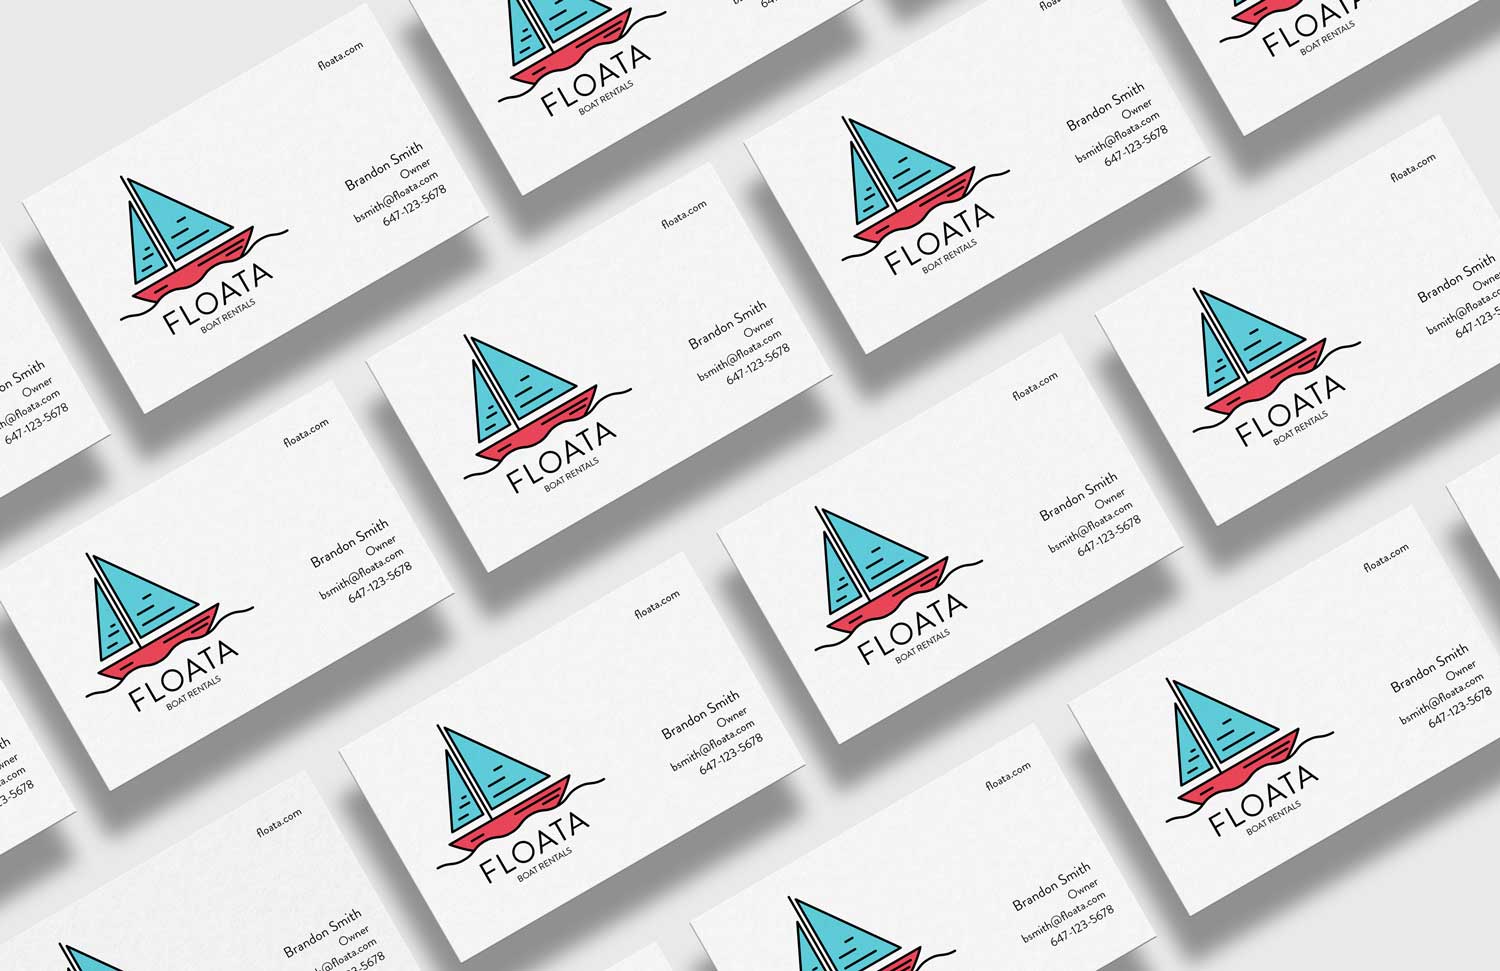 Floata logo business card mockup